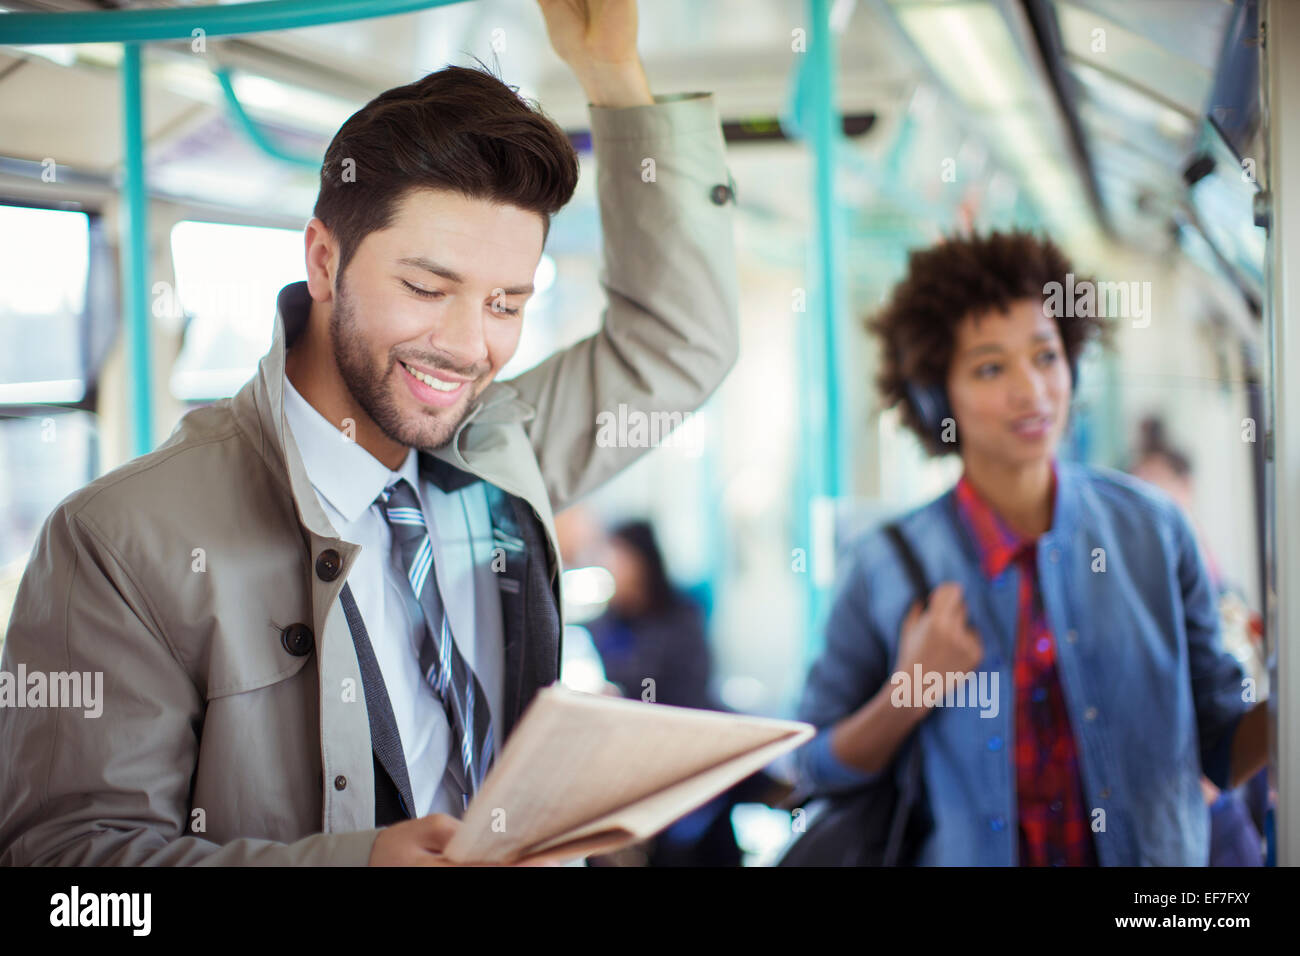 Businessman reading newspaper on train Stock Photo